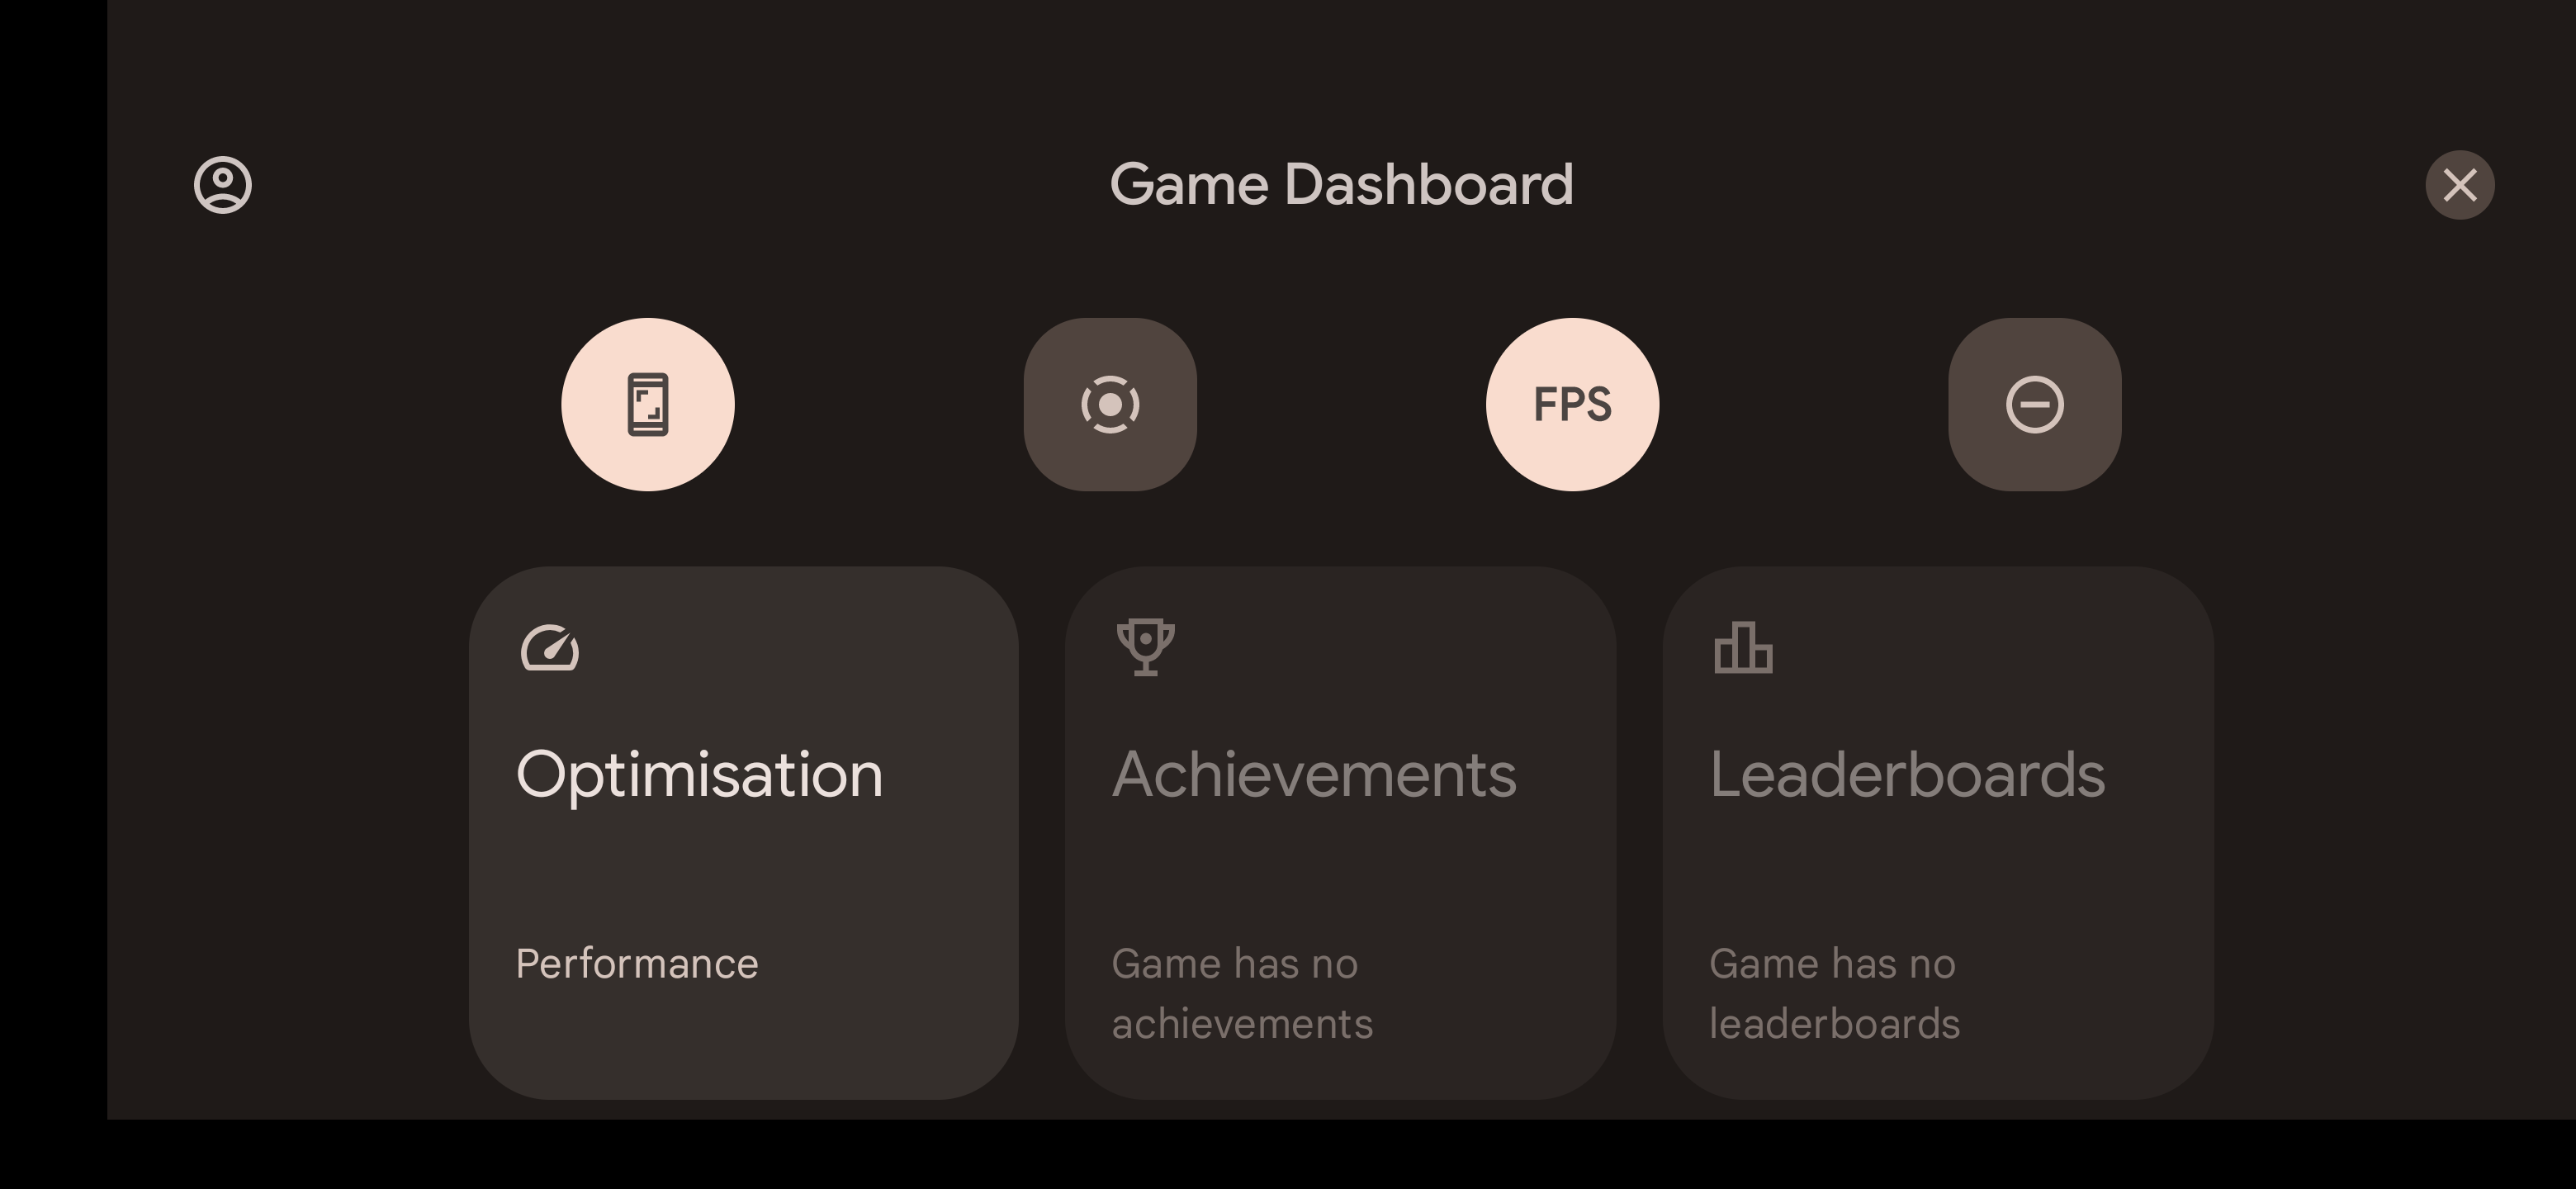 Game Dashboard Activity!